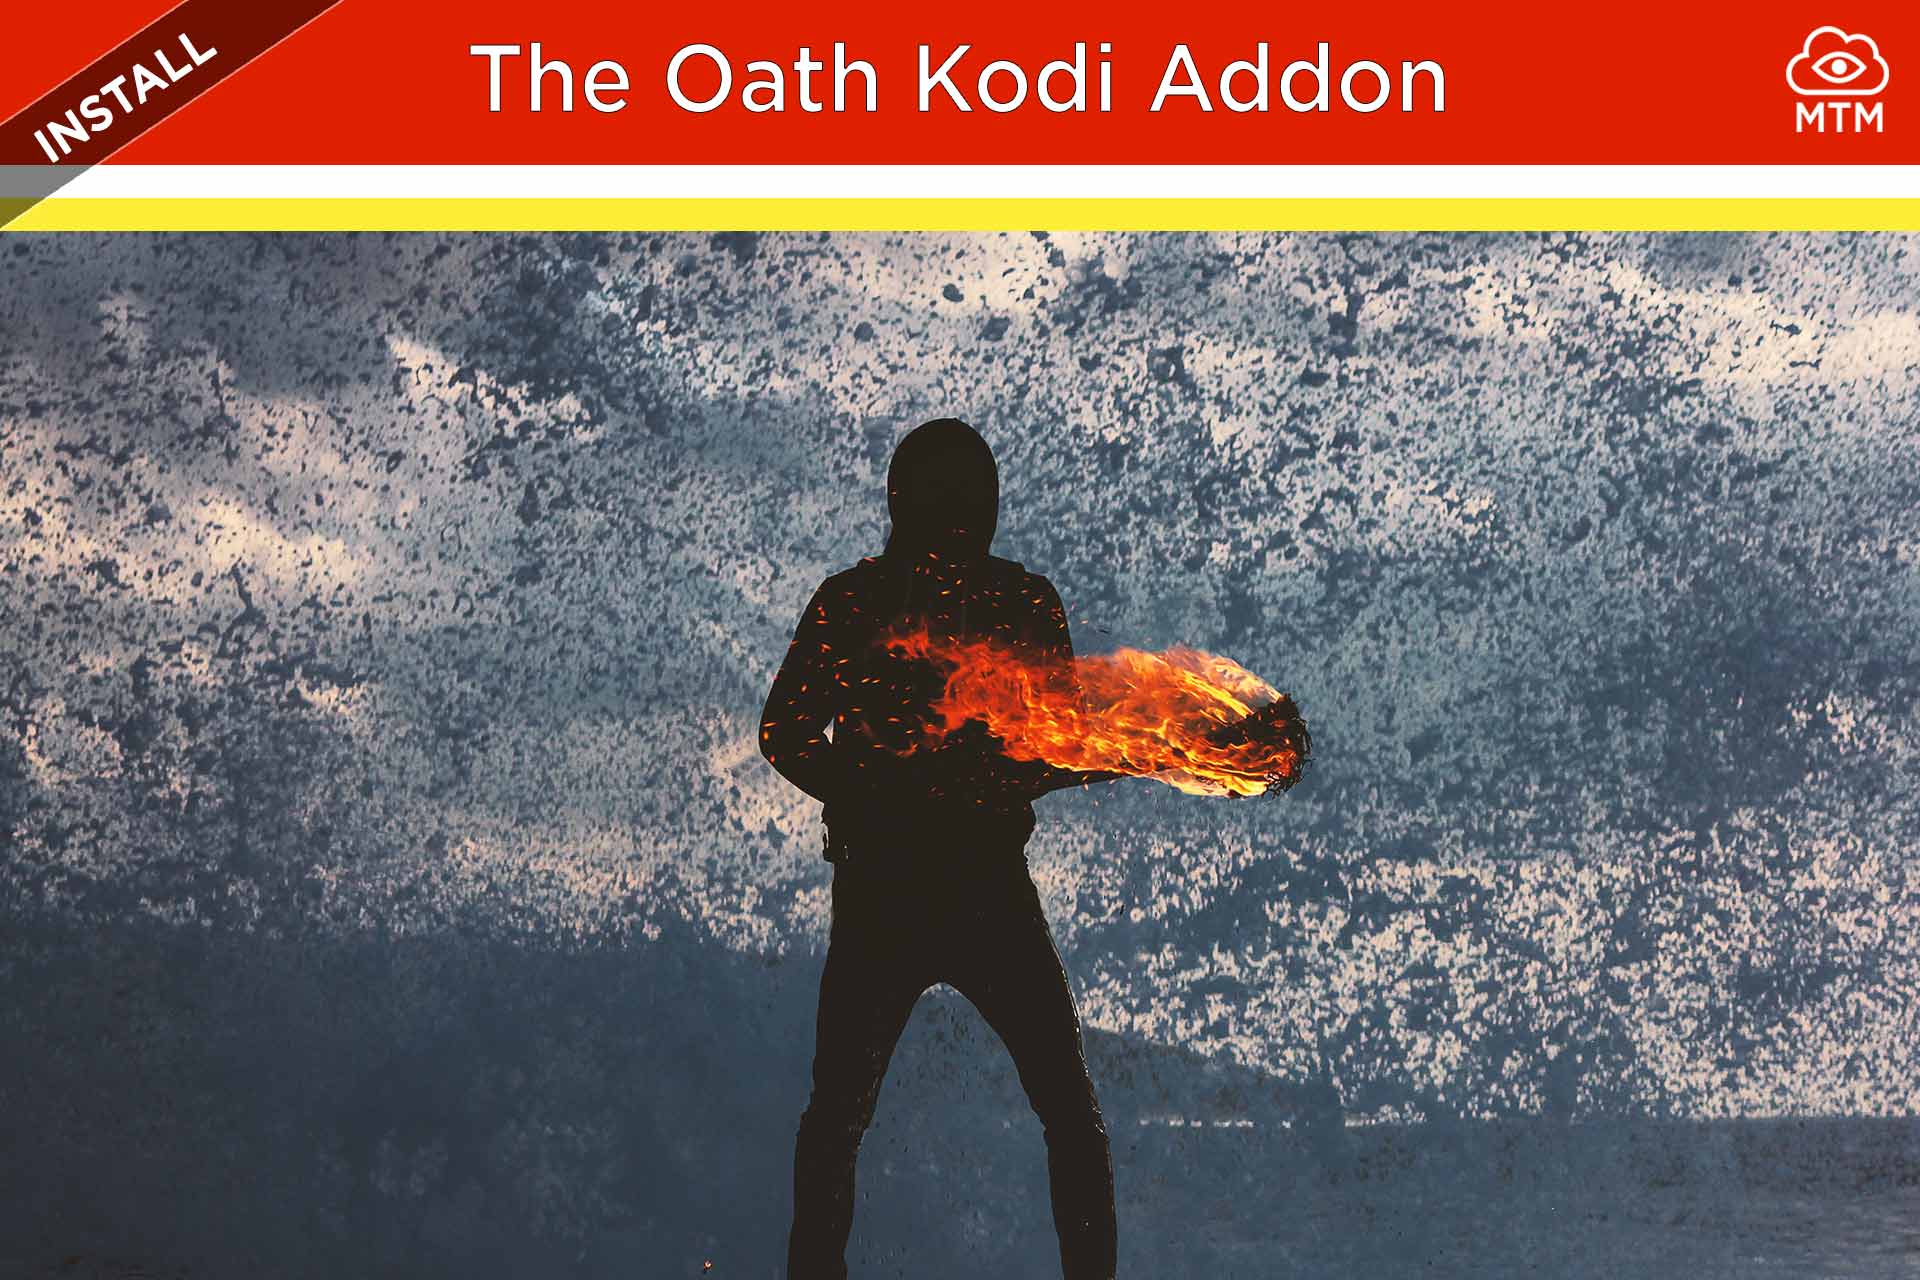 nstall The Oath Kodi Addon